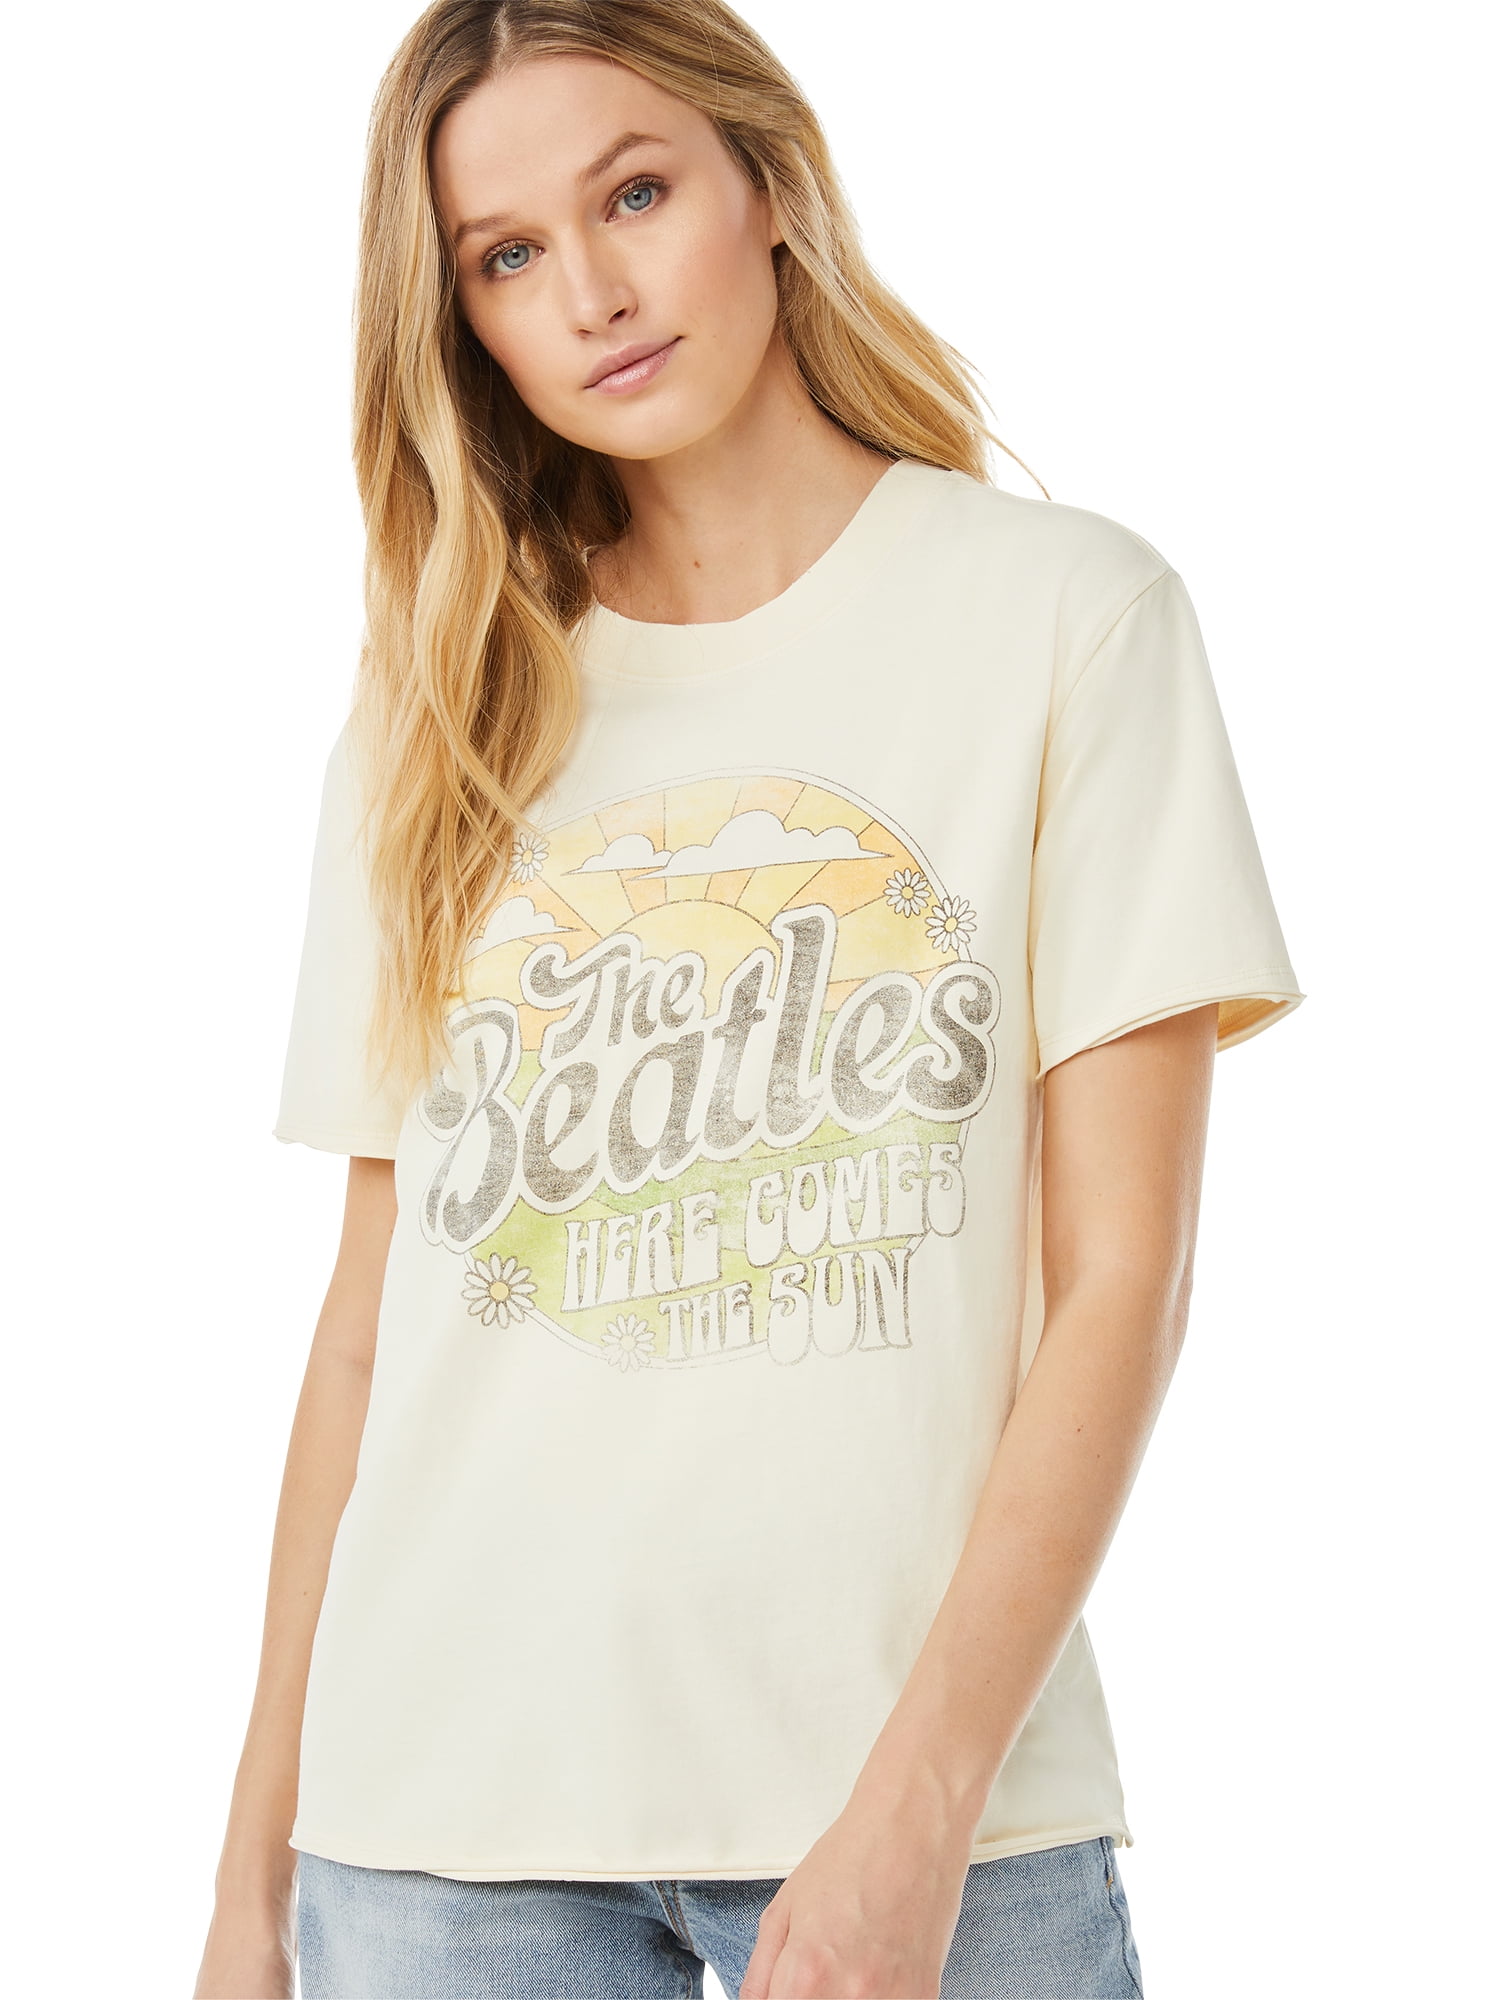 The Beatles Women's T-Shirt Music tee Here comes the sun Lyrics 